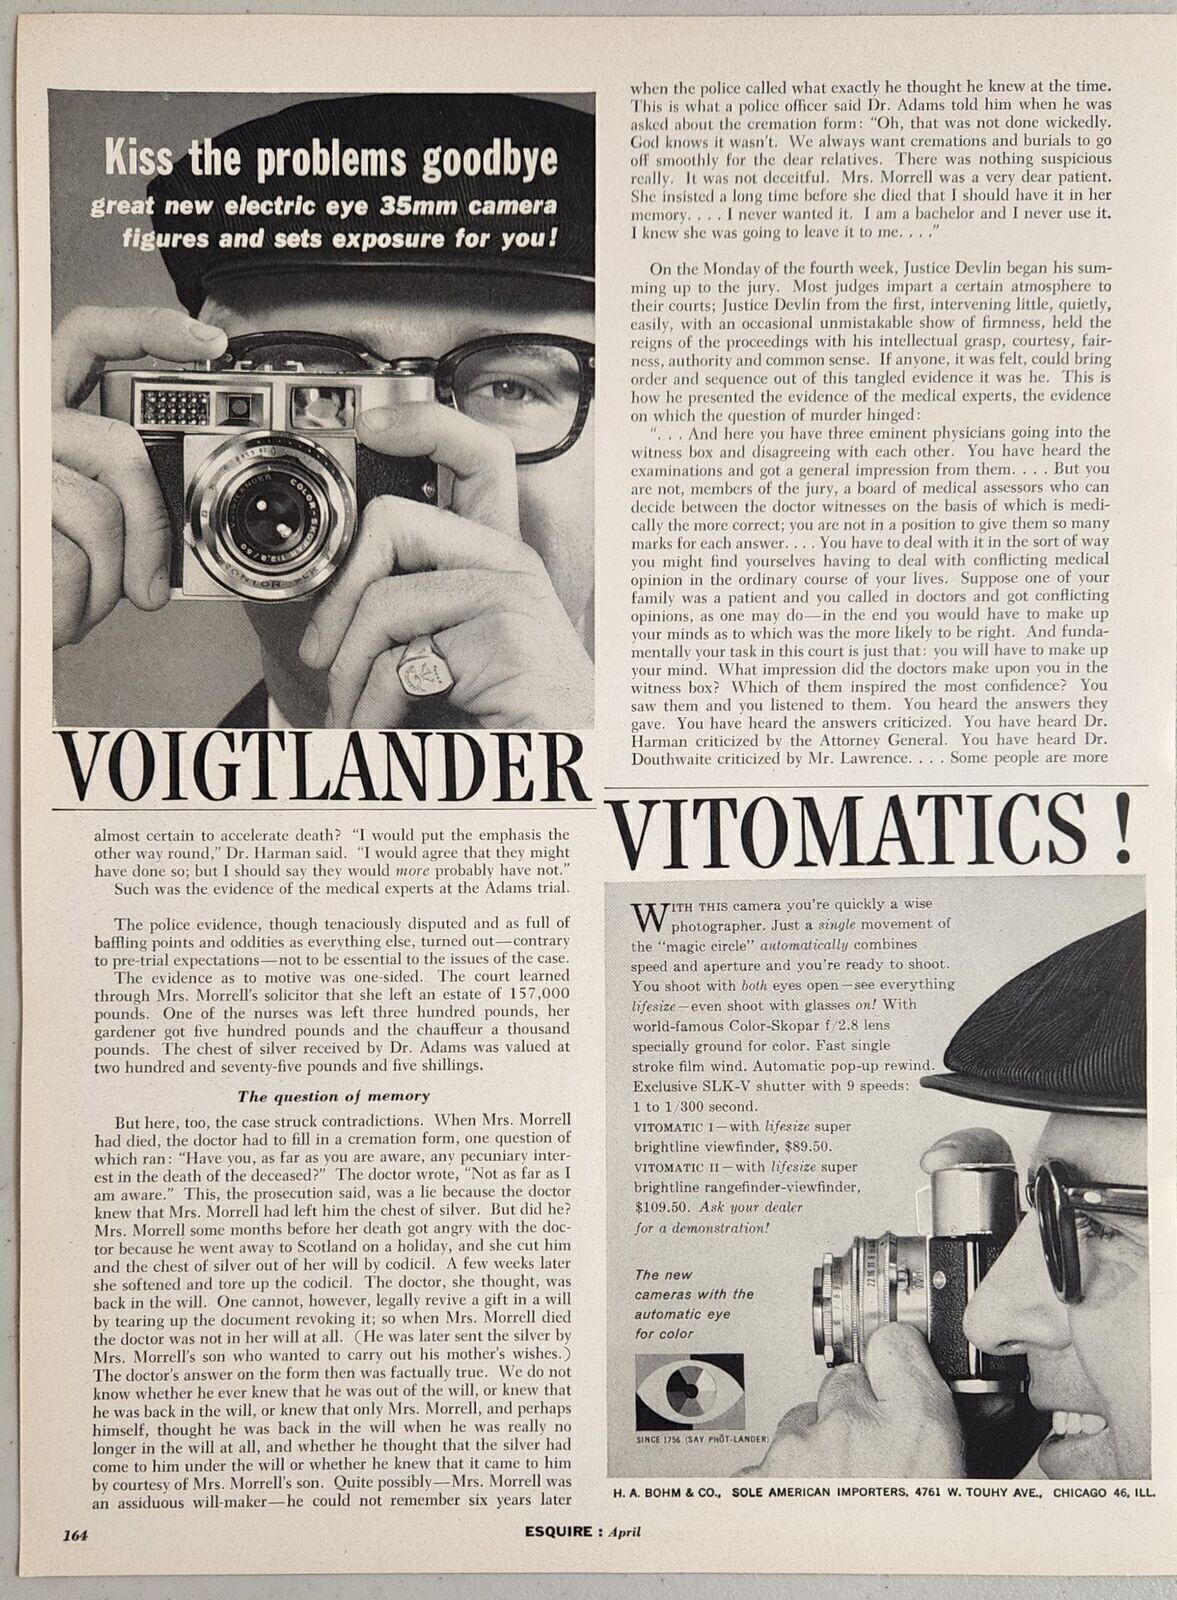 1959 Print Ad Voightlander Vitomatic Electric Eye 35mm Cameras Bohm Chicago,IL